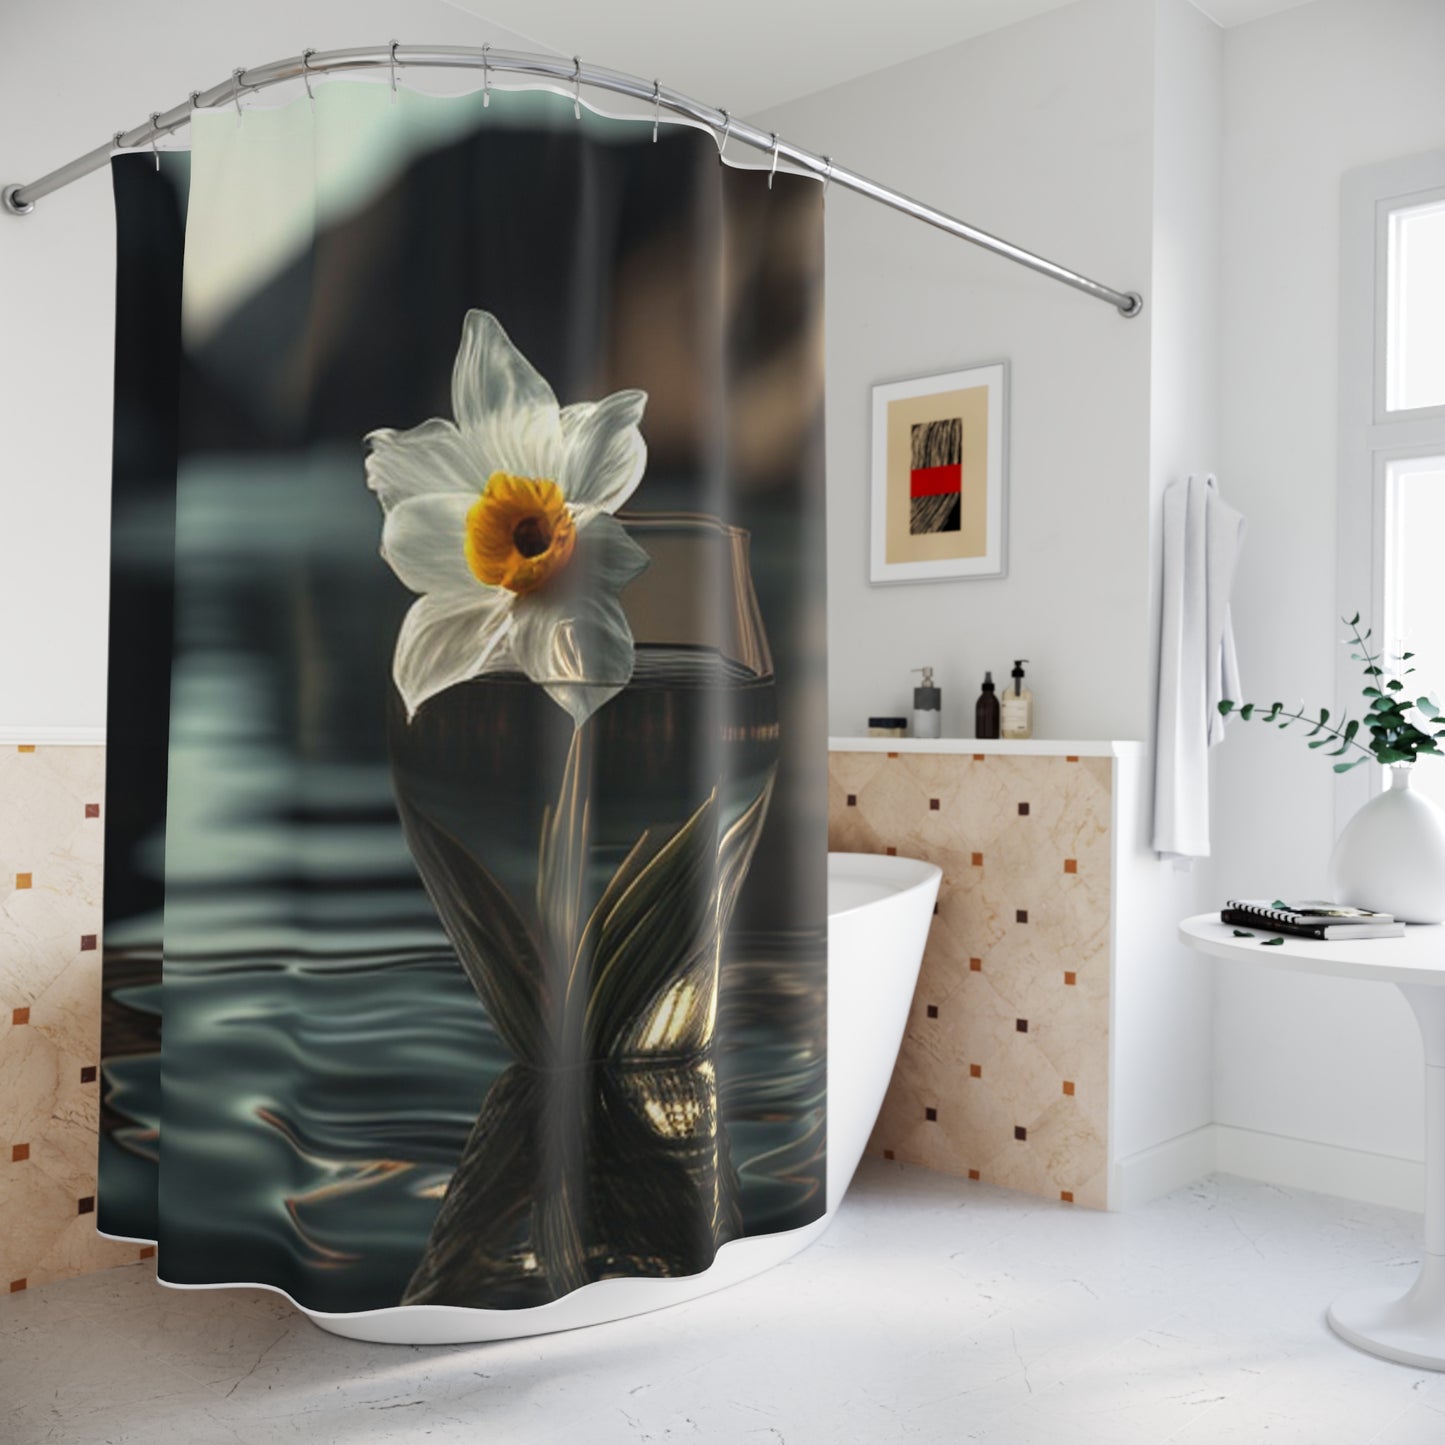 Polyester Shower Curtain Daffodil 2